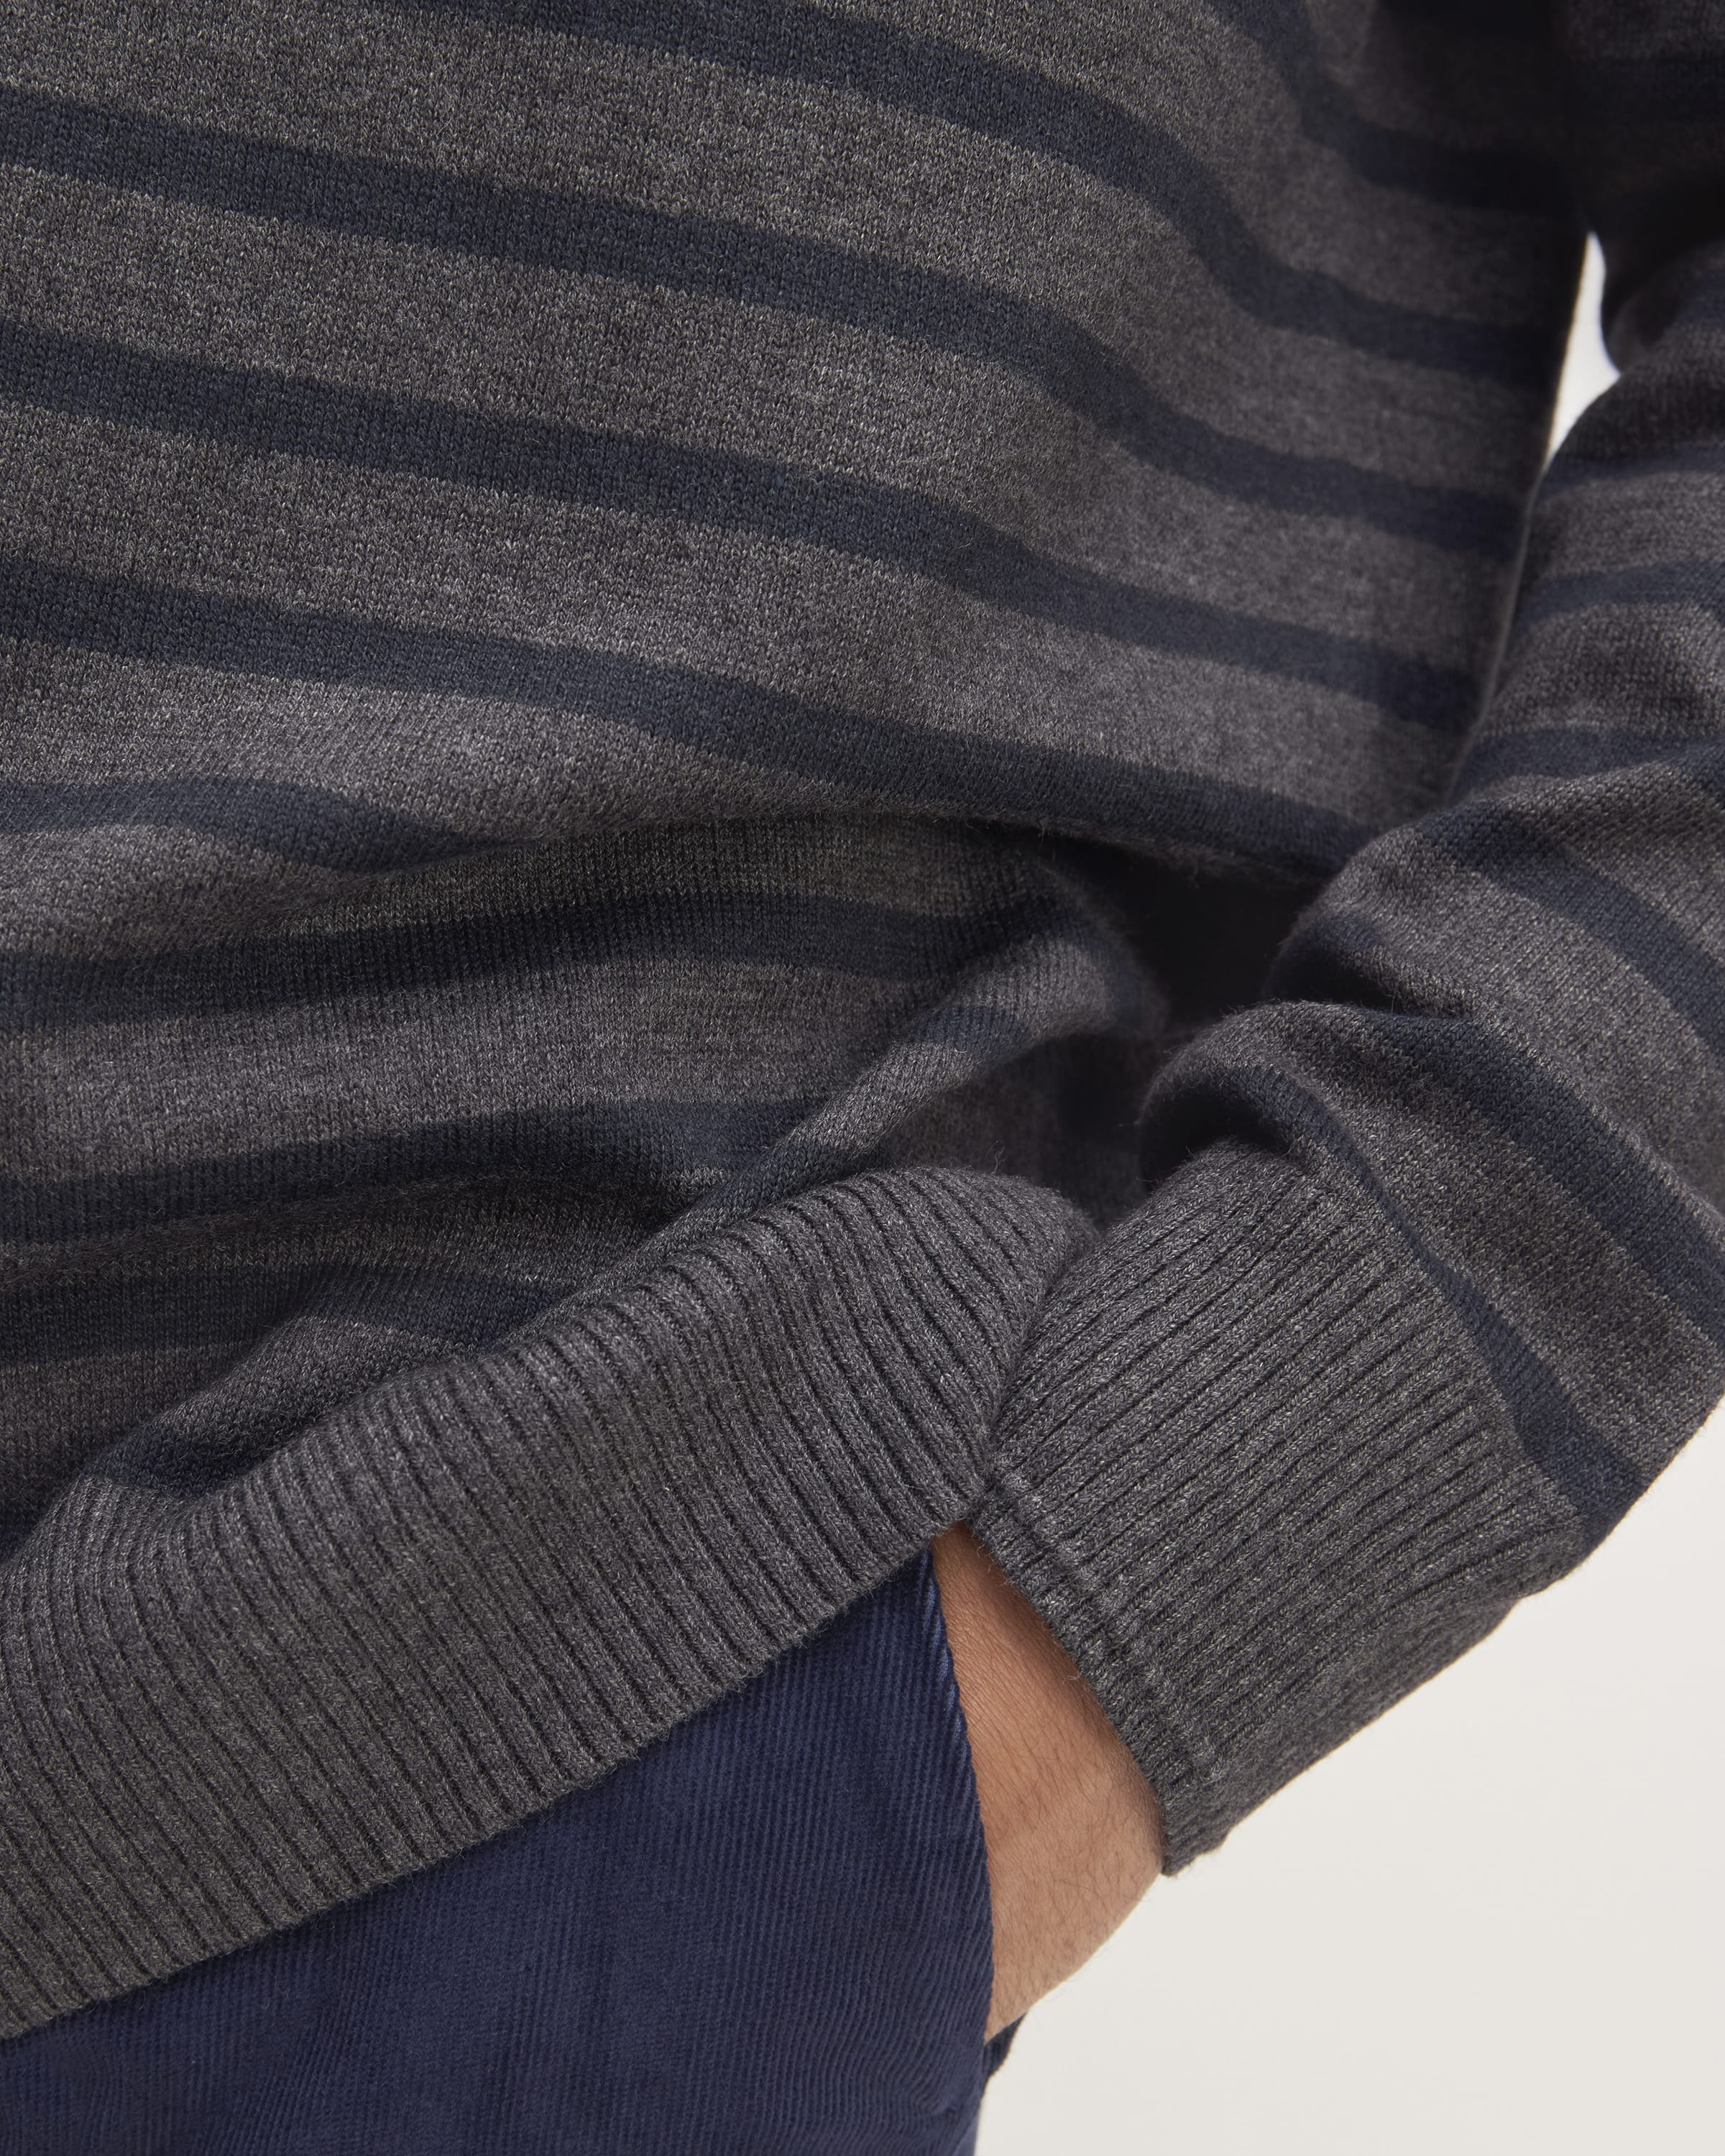 The No-Sweat Sweater | Uniform Heathered Midnight / Heathered Ash ...